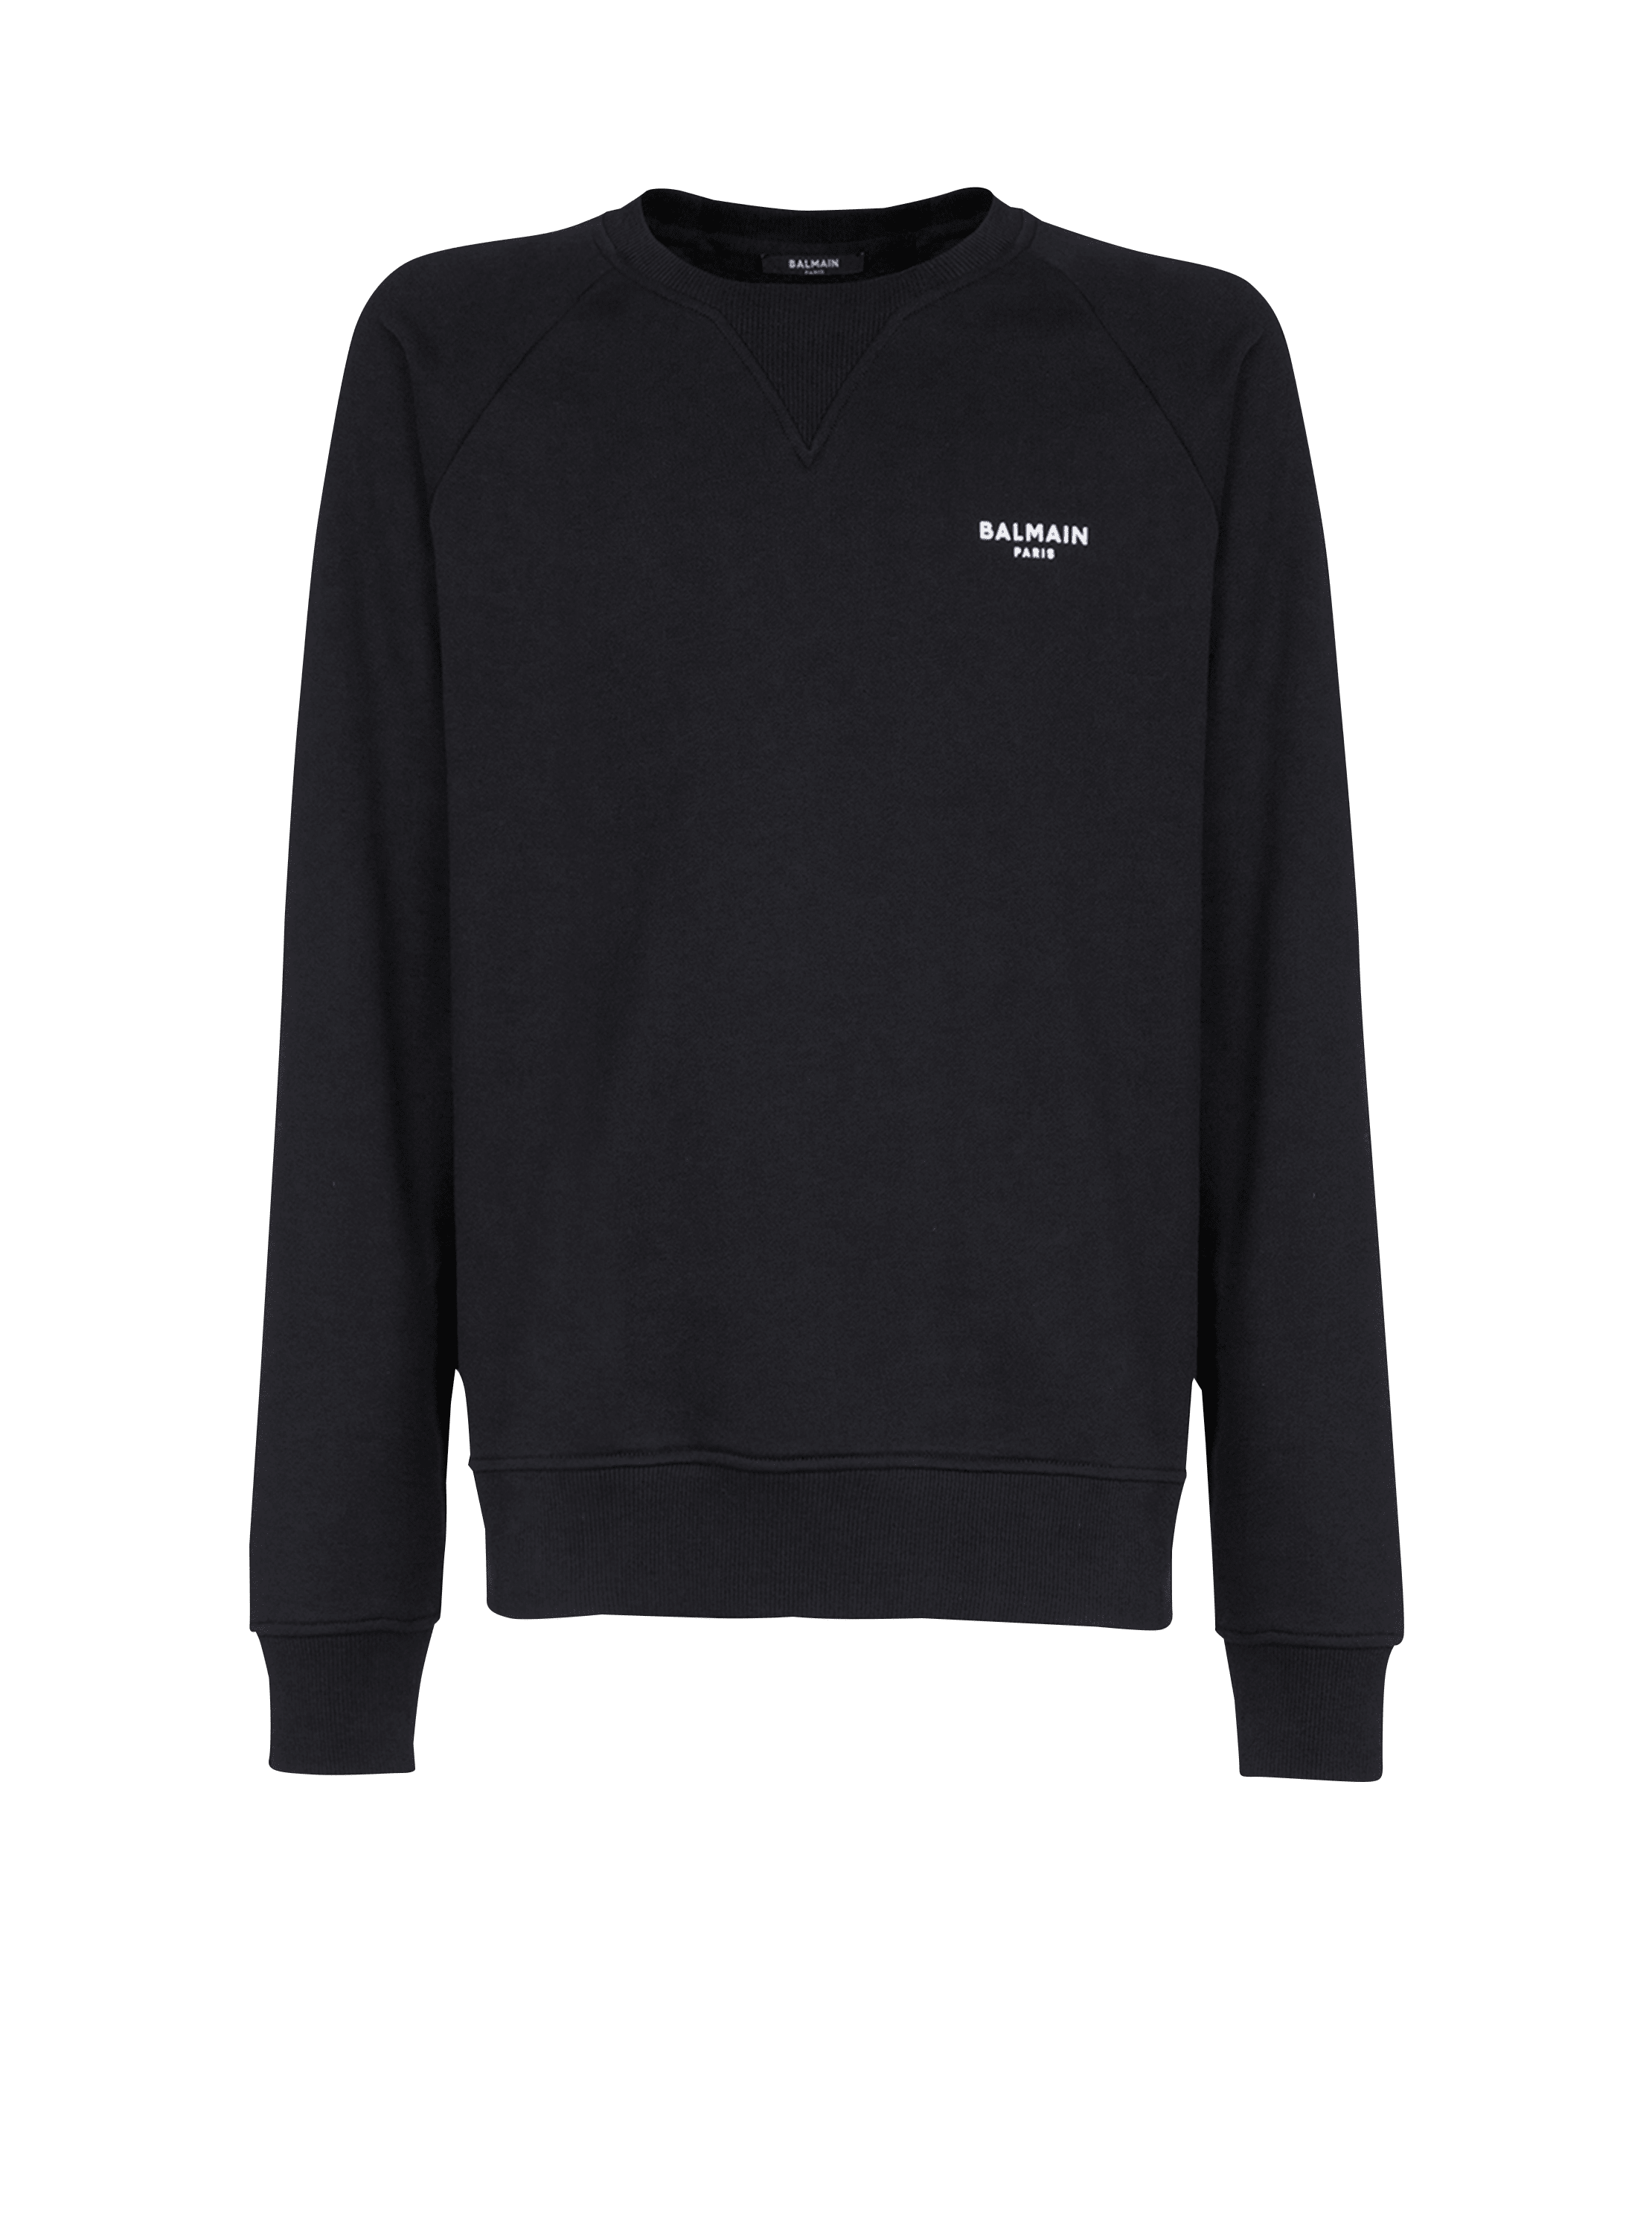 Beflocktes Balmain Sweatshirt, schwarz, hi-res